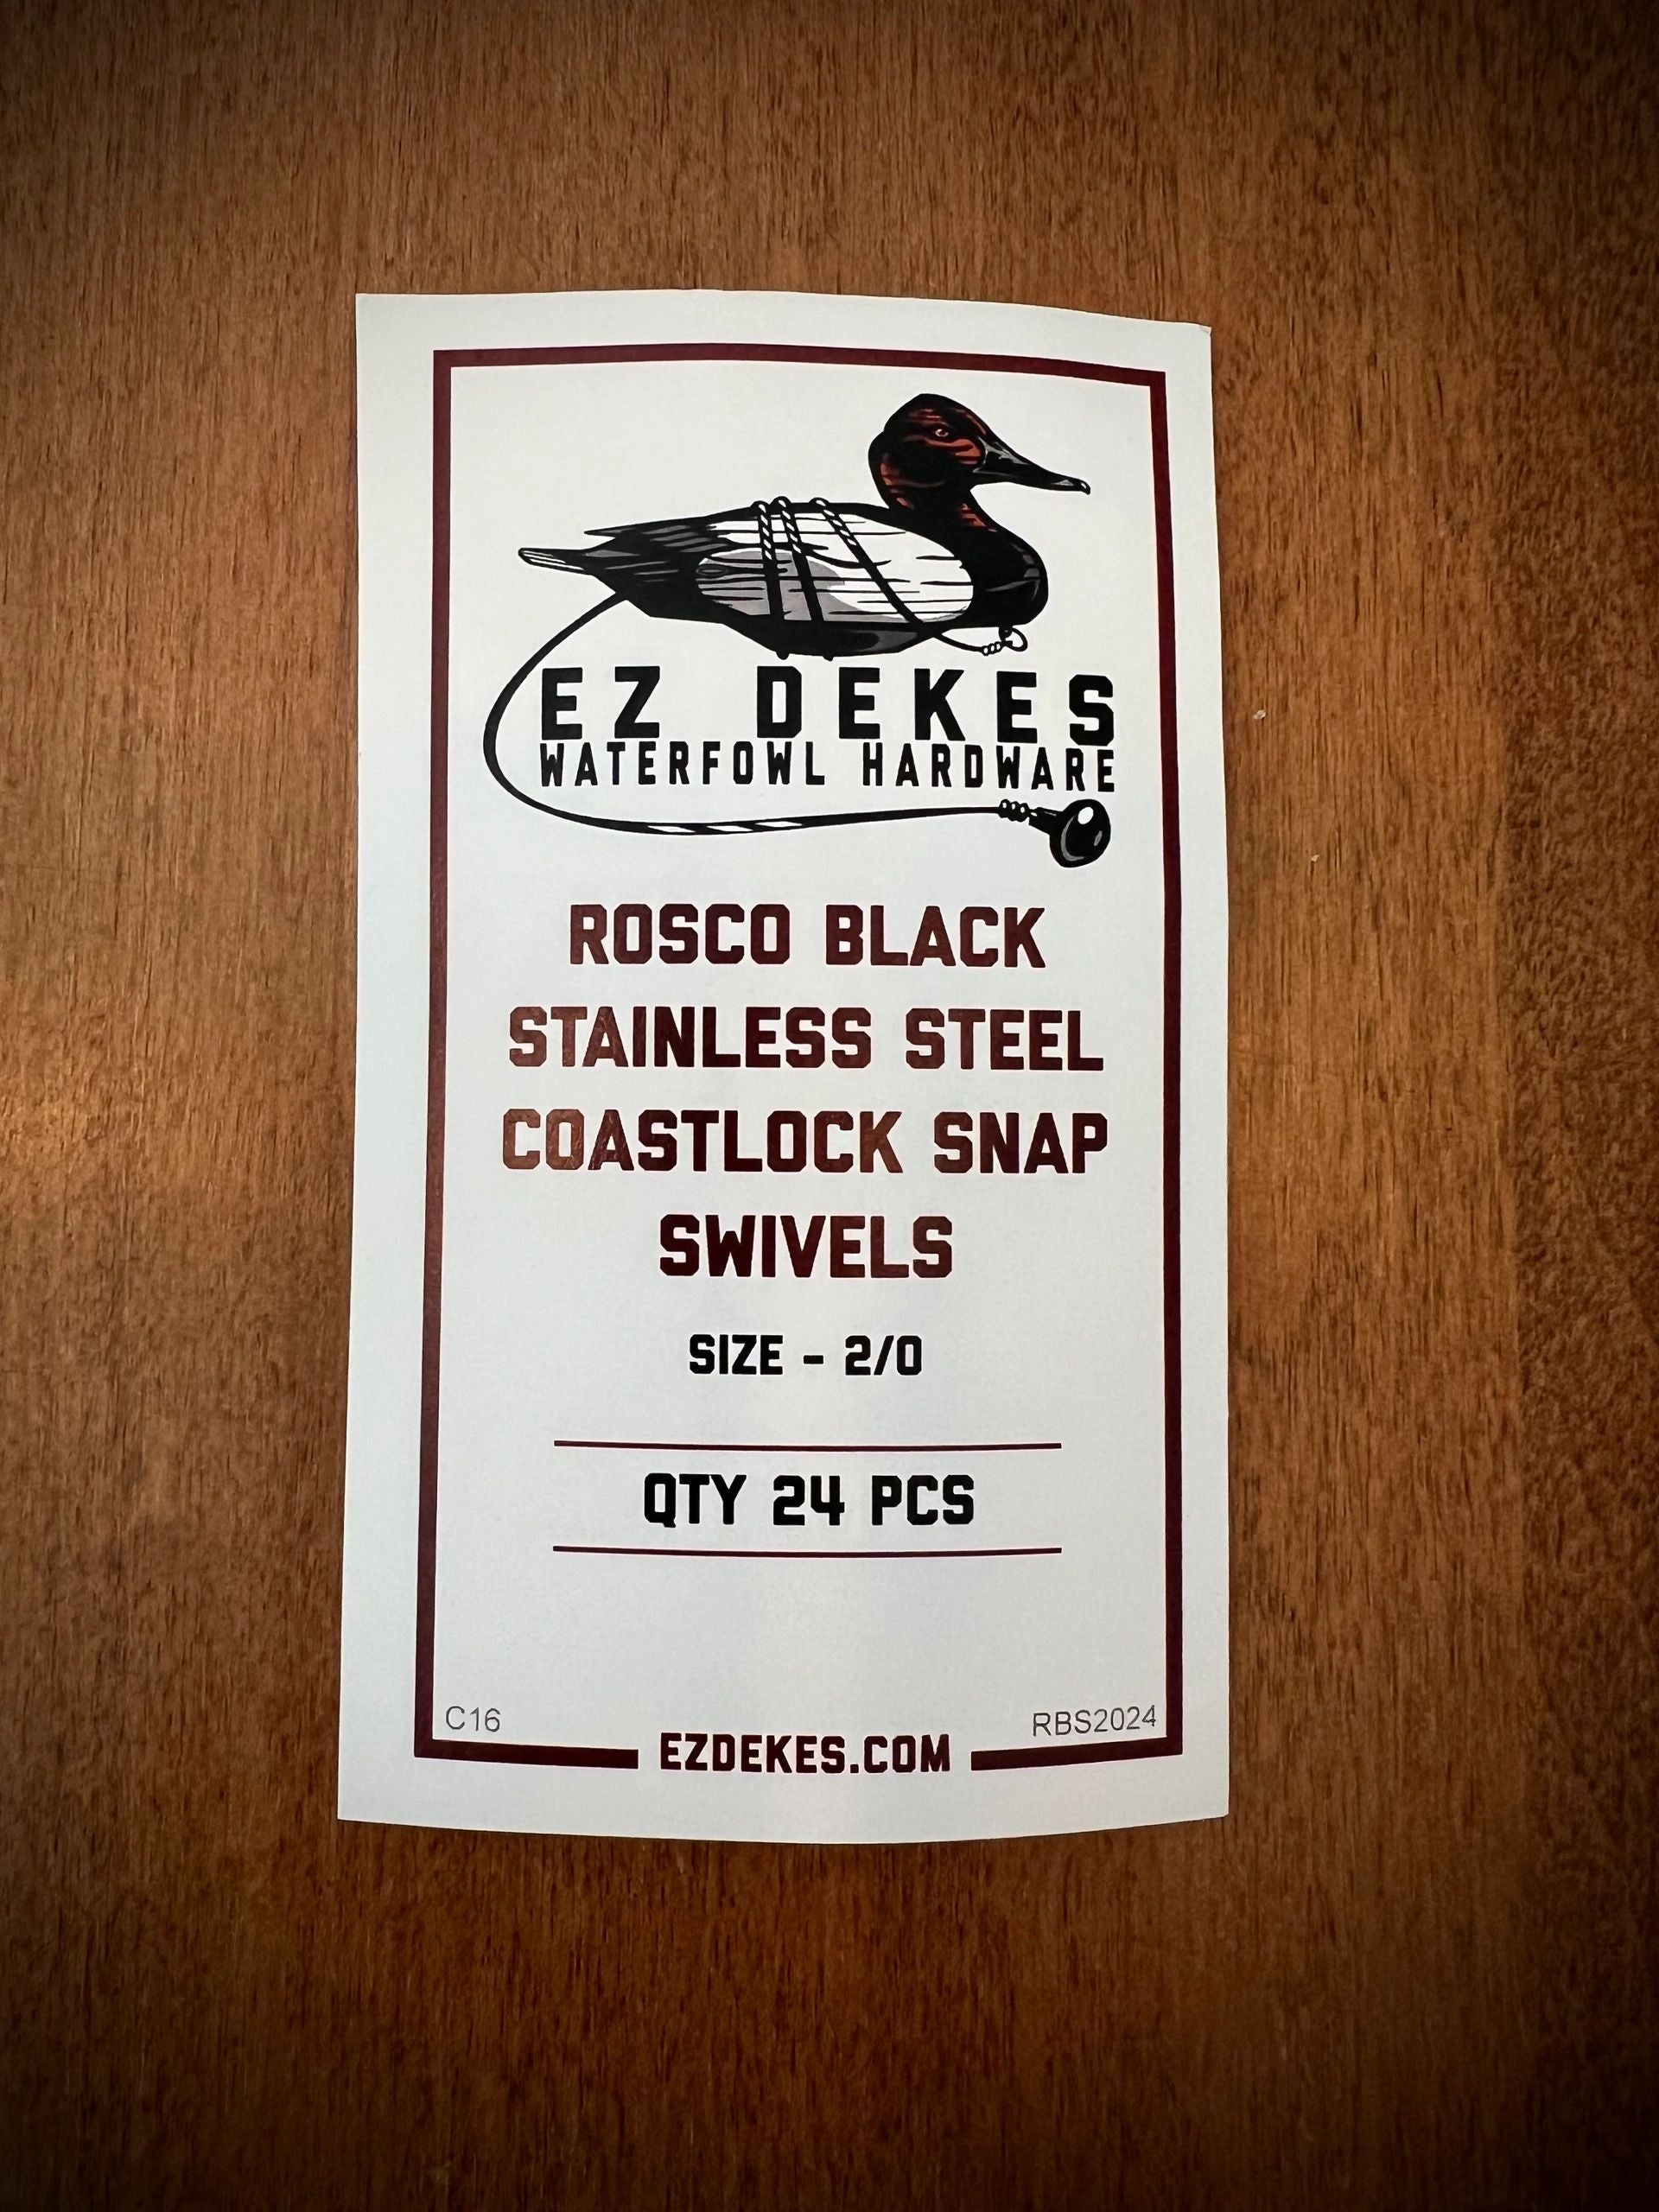 Rosco Black Stainless Steel Coastlock Snap Swivel - Size 2/0